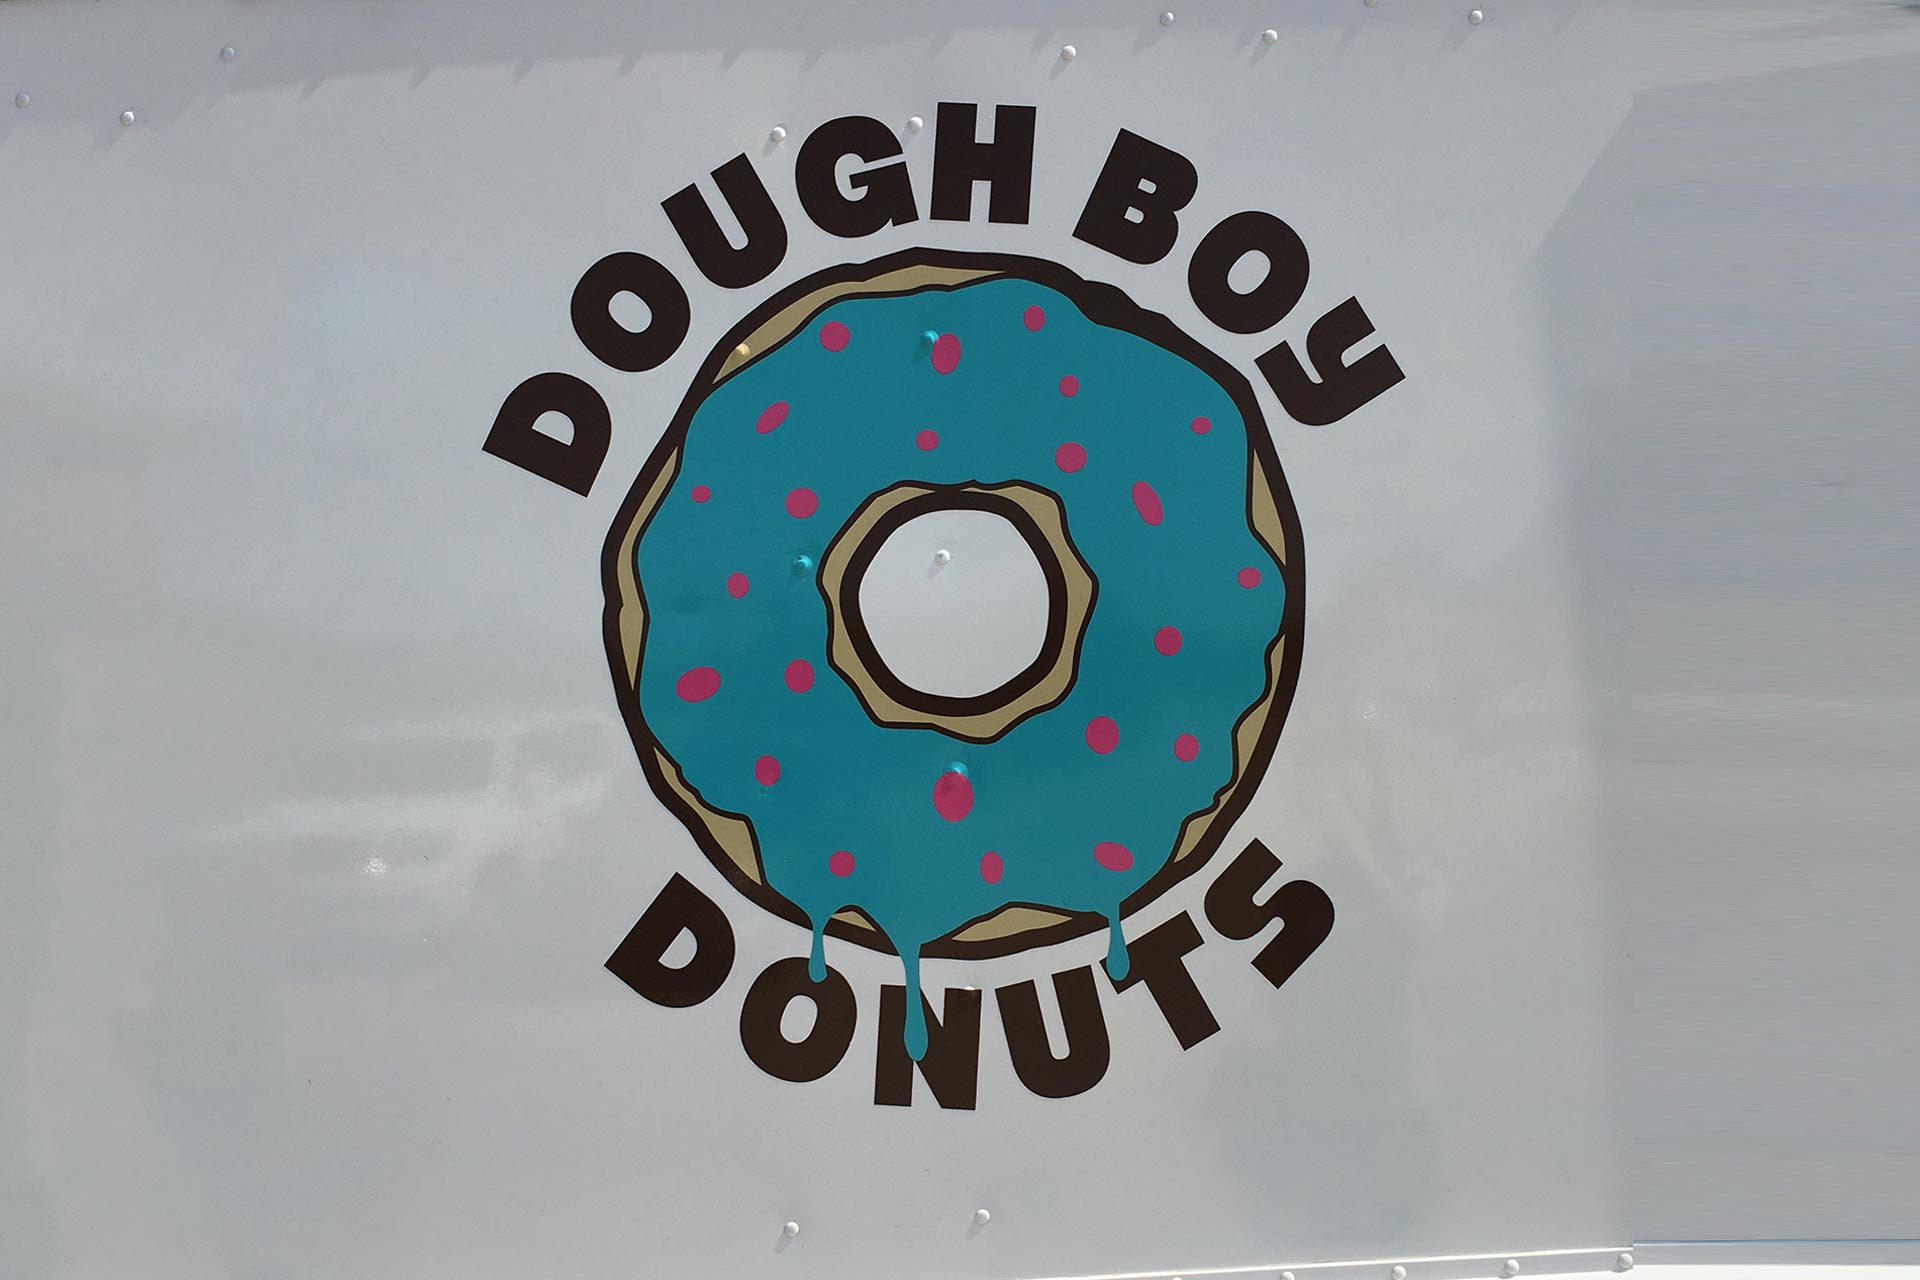 Dough Boy Donuts Review